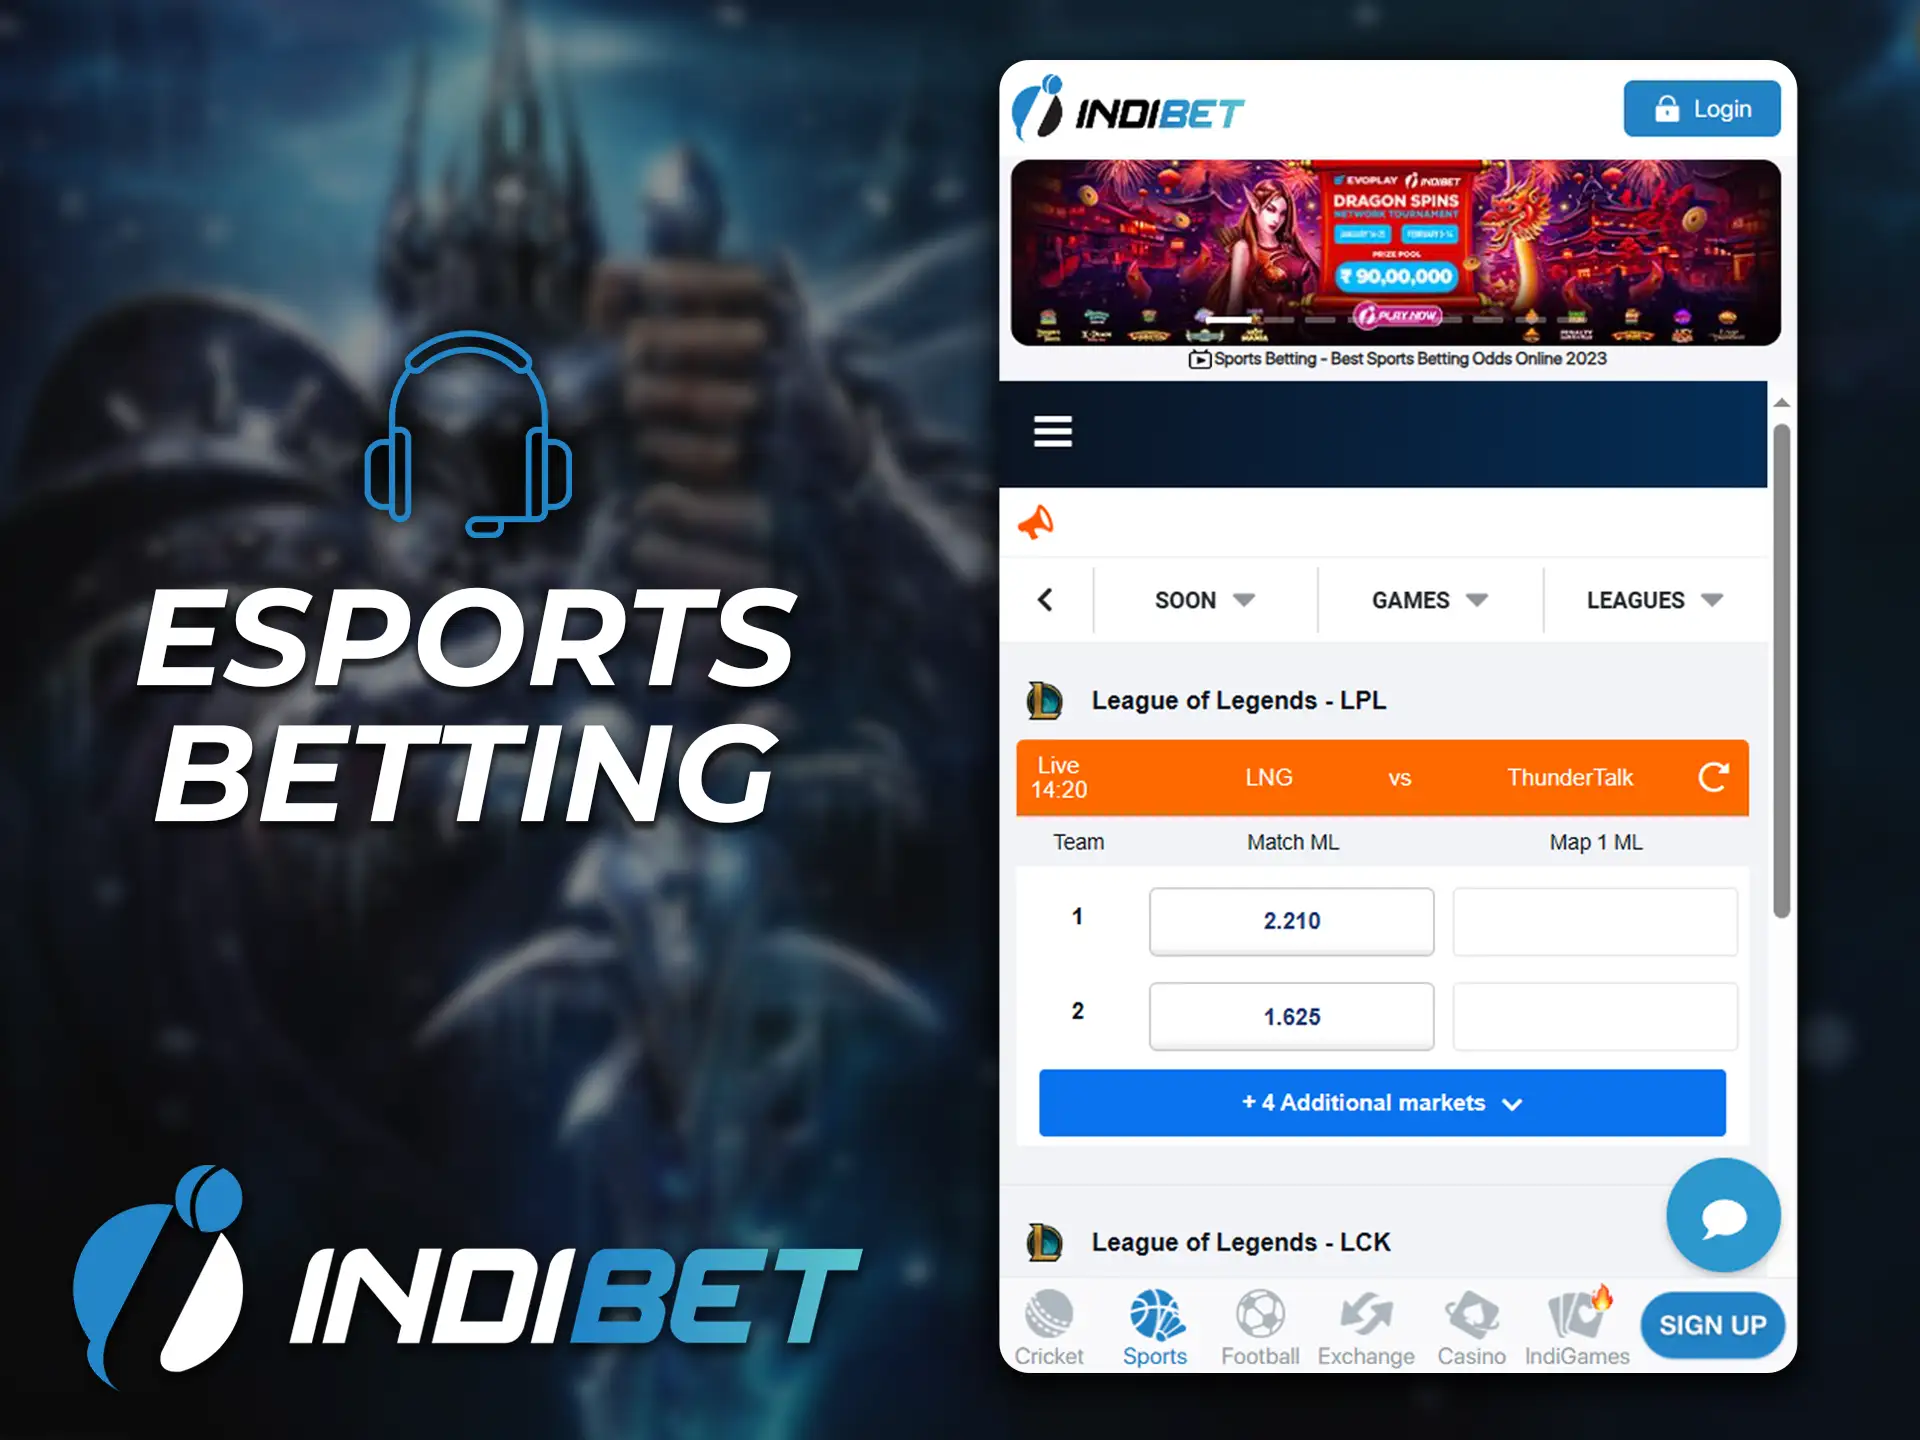 Bet on esports matches on the Indibet app.